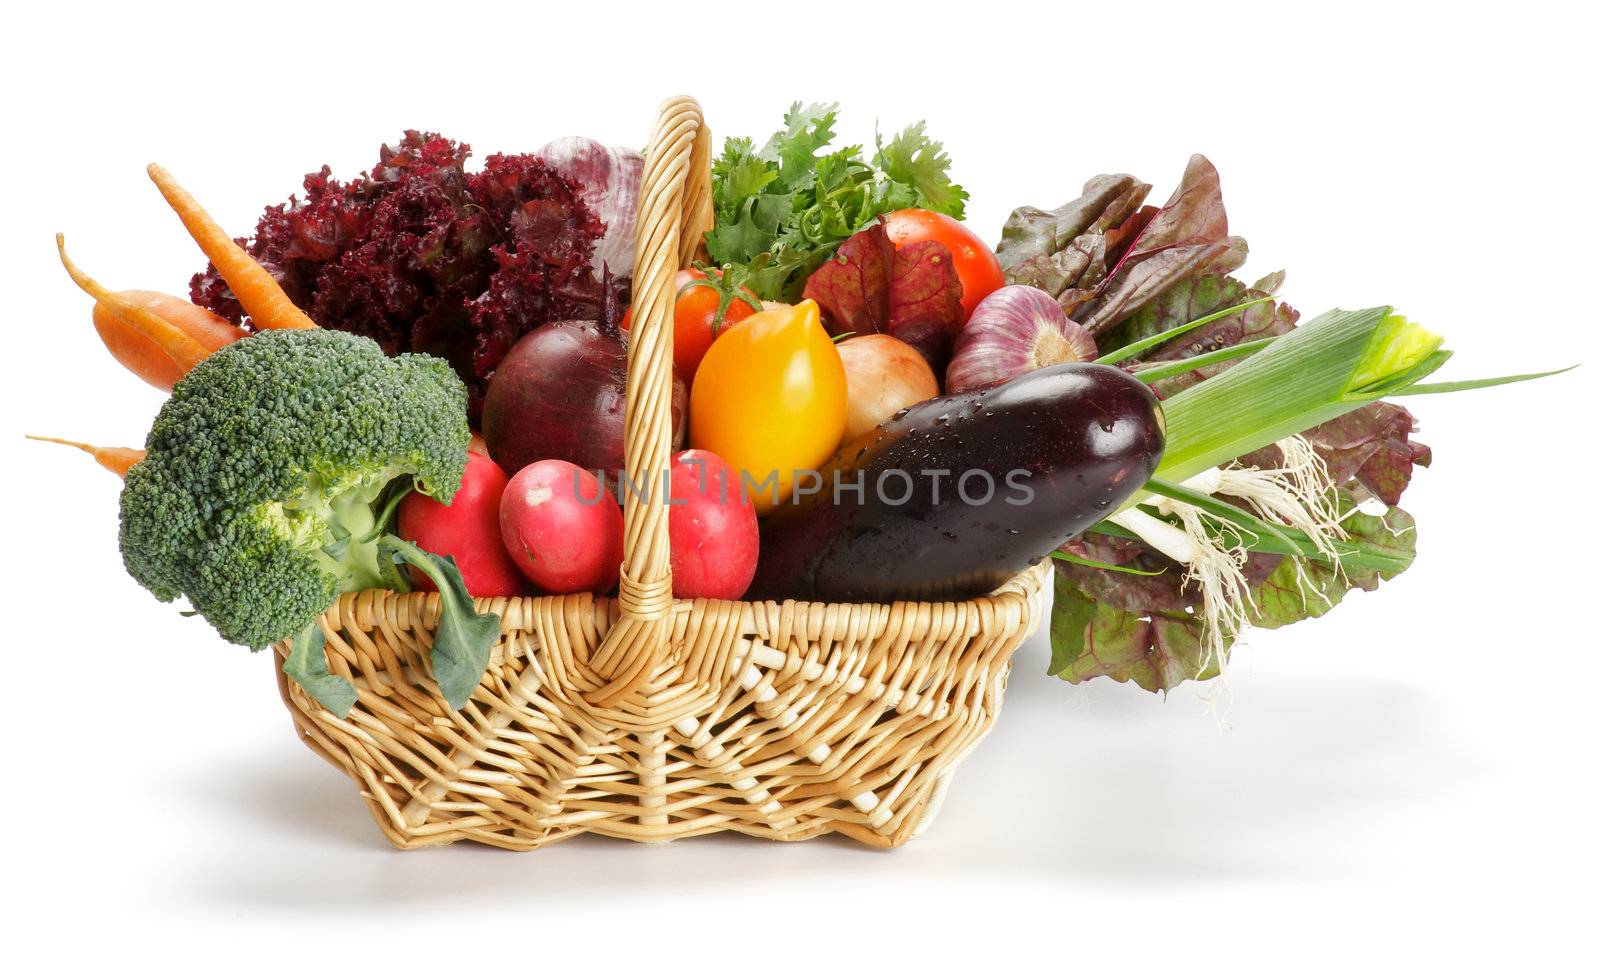 Vegetable Basket by zhekos